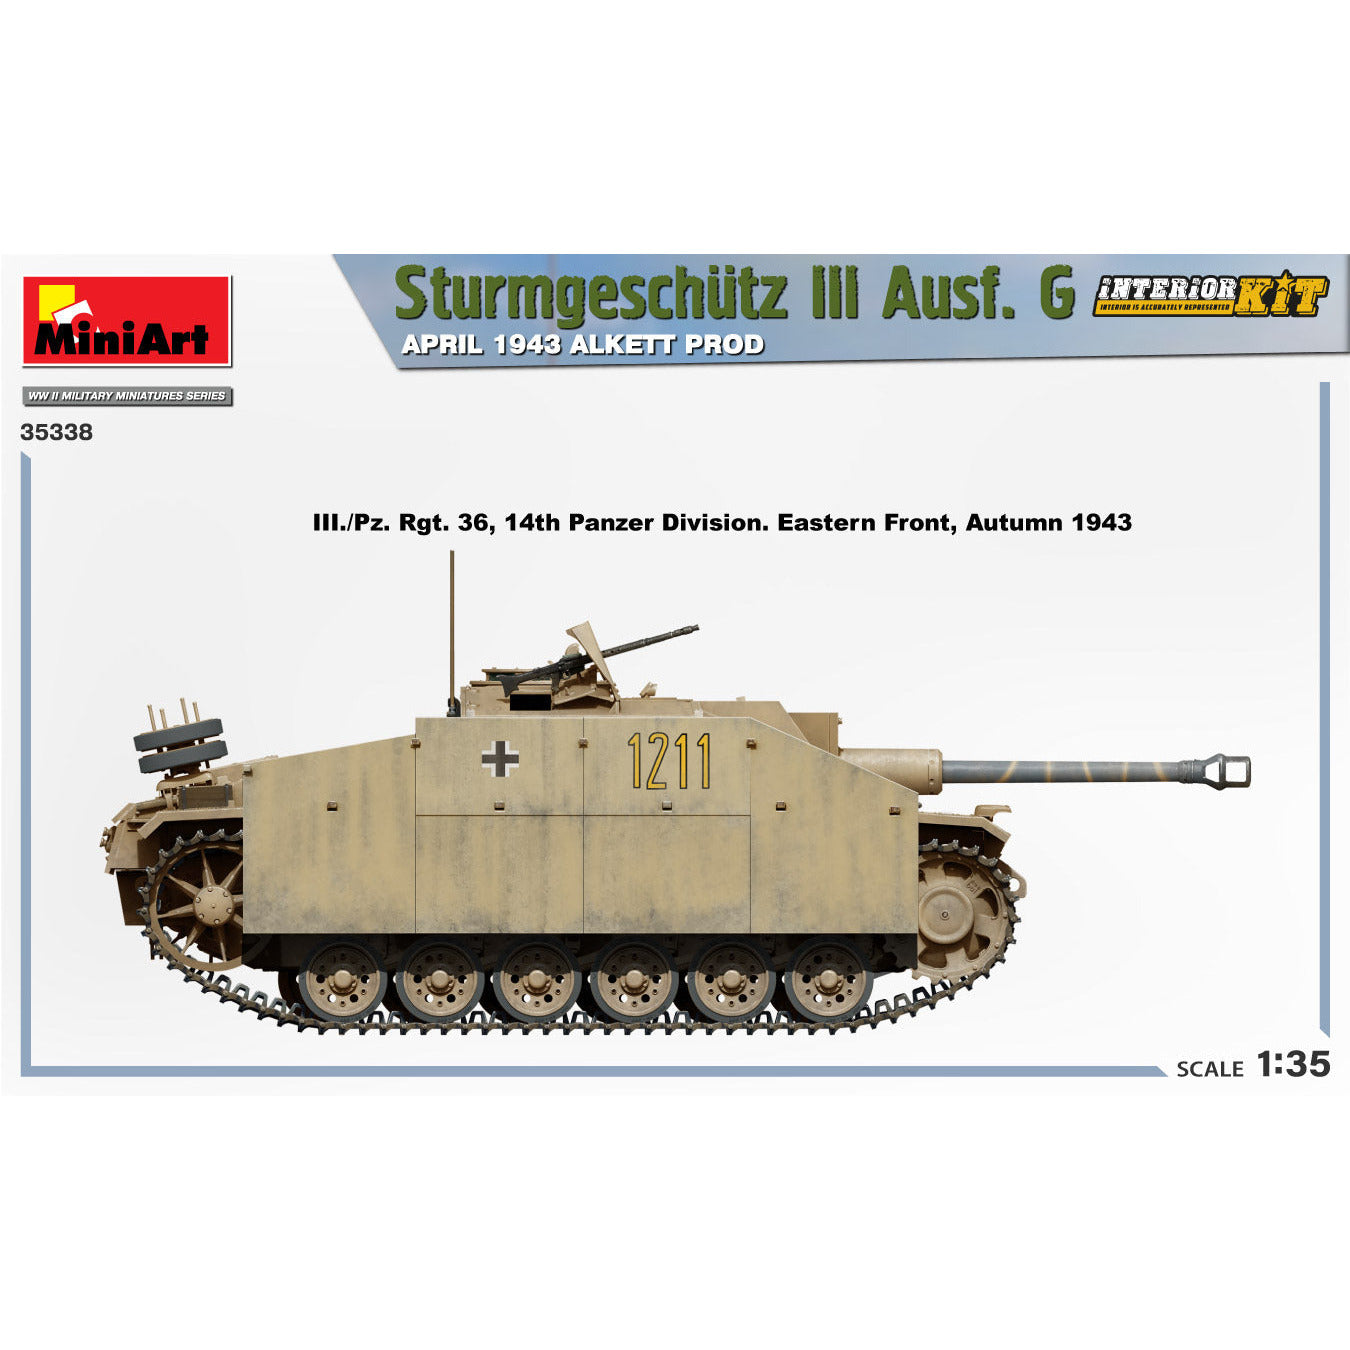 MINIART 1/35 Sturmgeschutz III Ausf. G April 1943 Alkett Prod. Interior Kit